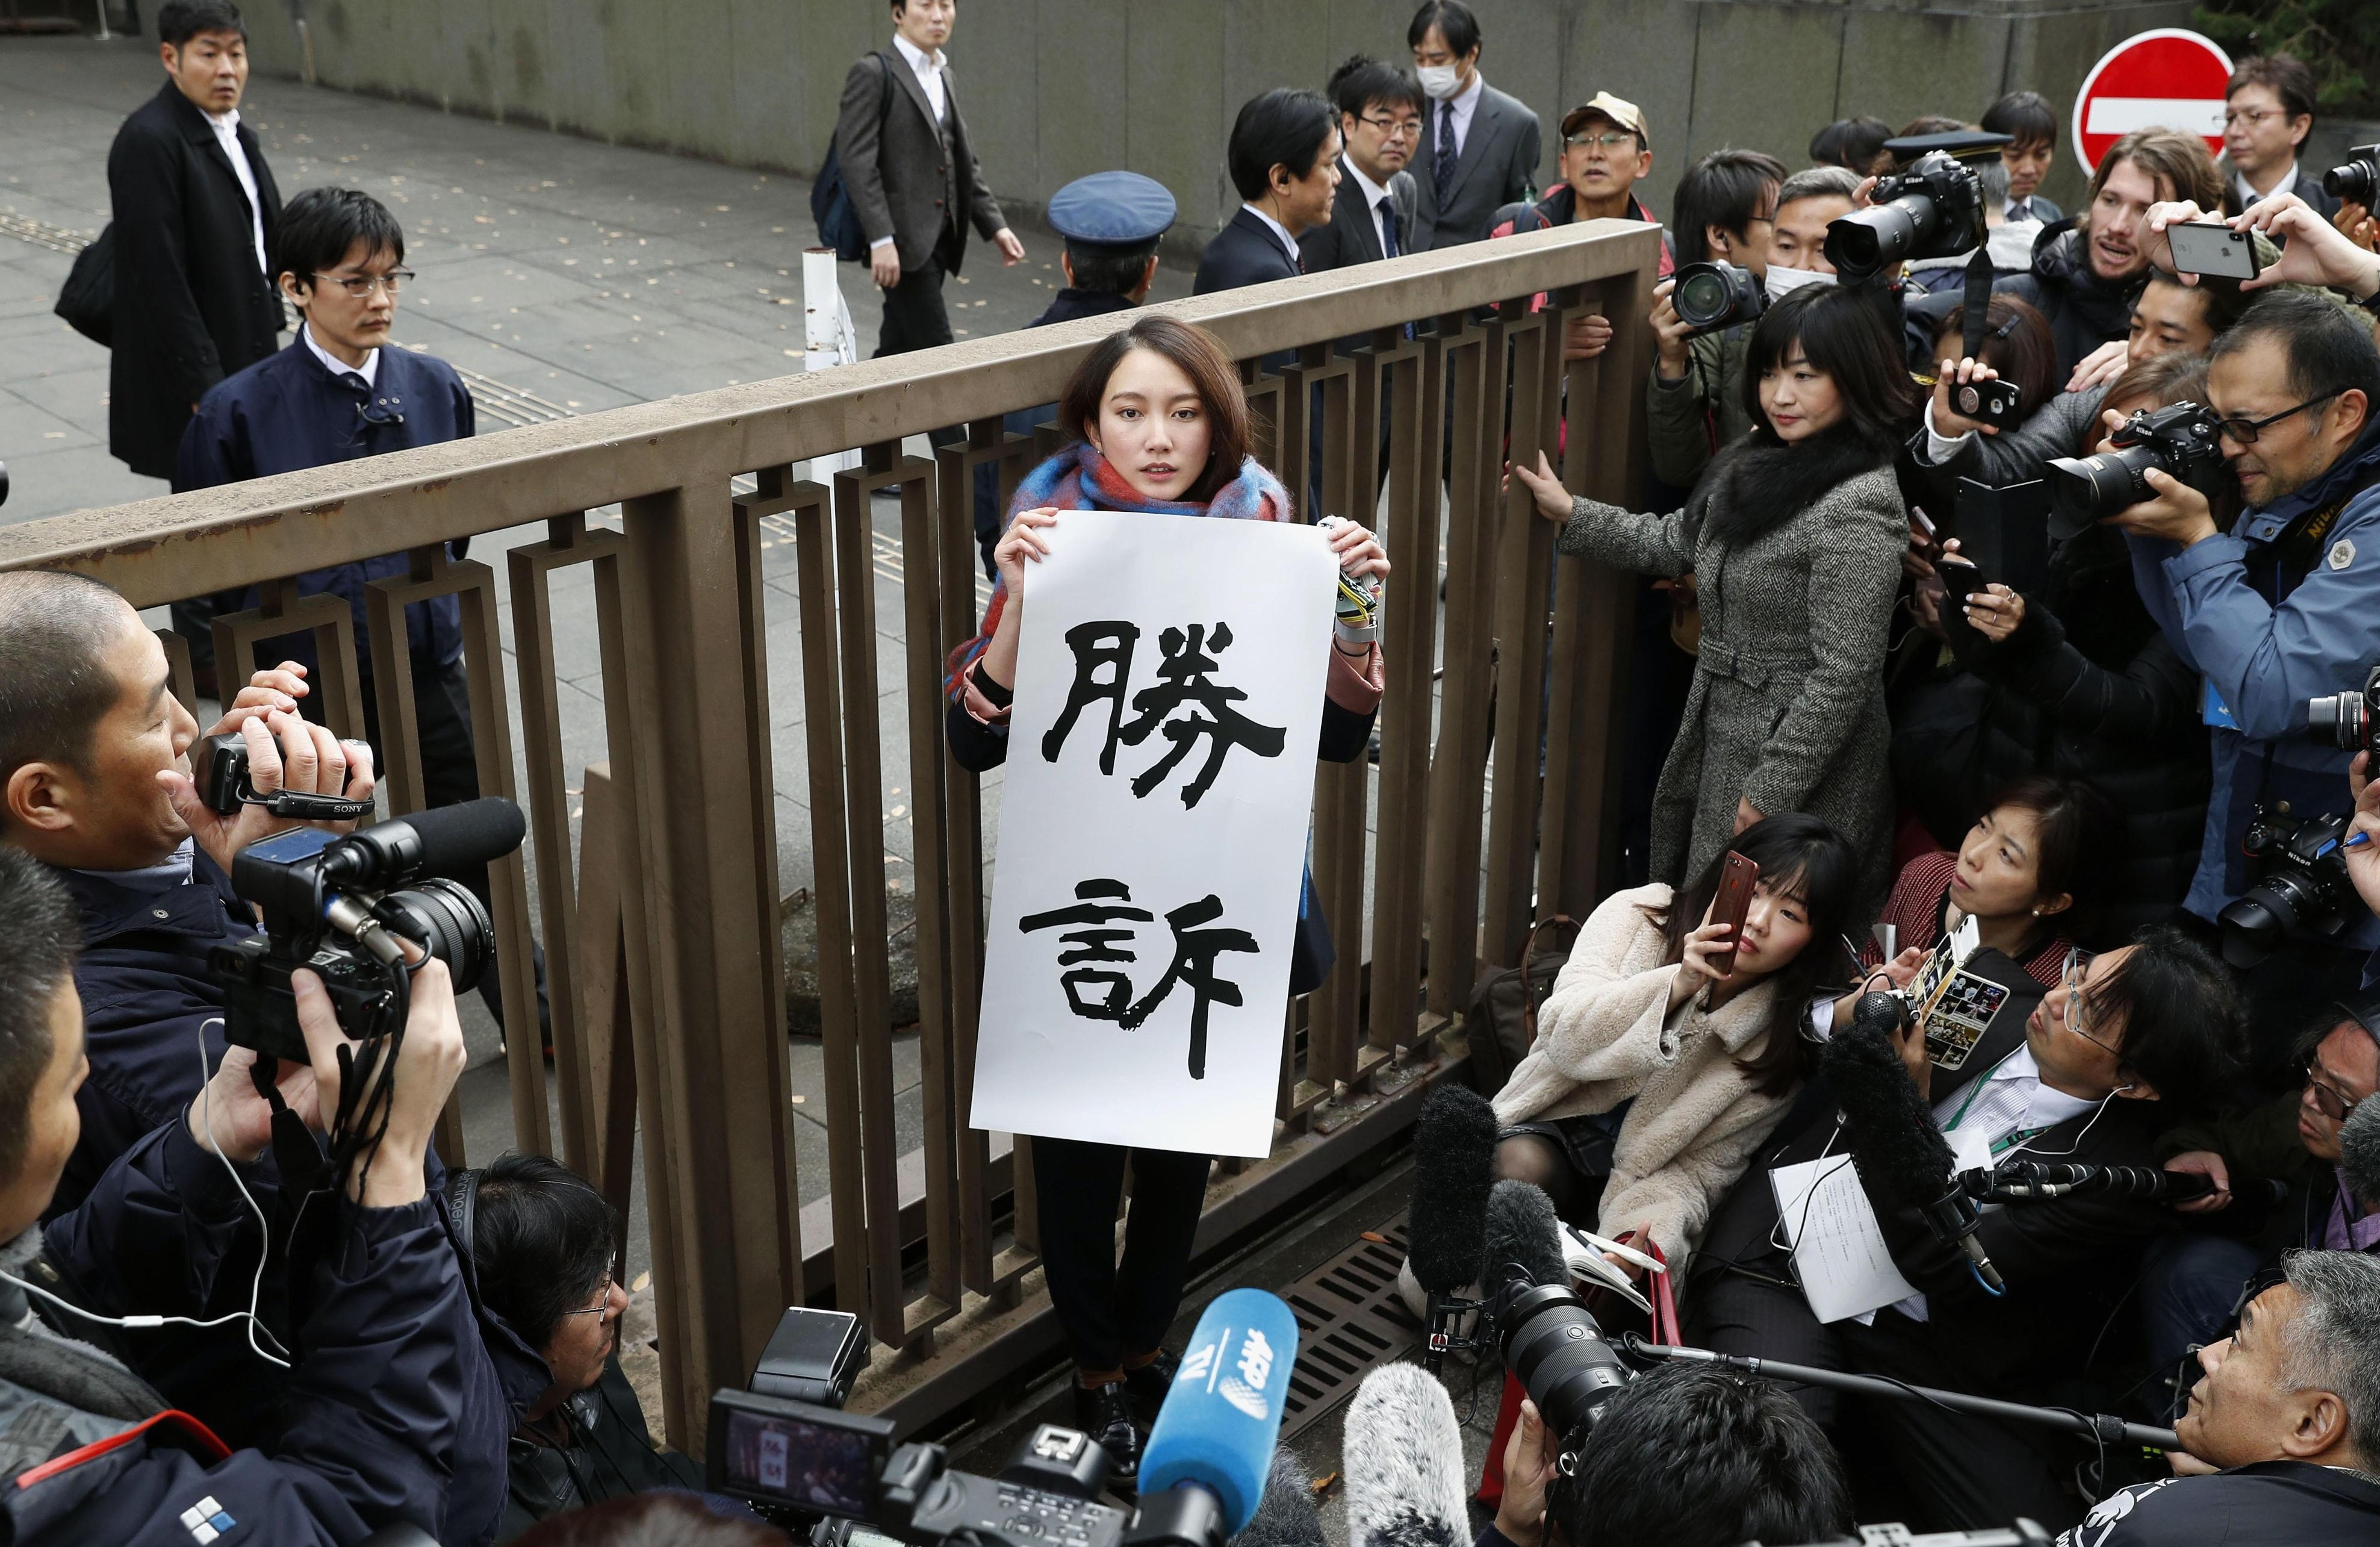 Japan journalist Shiori Ito awarded ¥3.3 million in damages in high-profile rape case